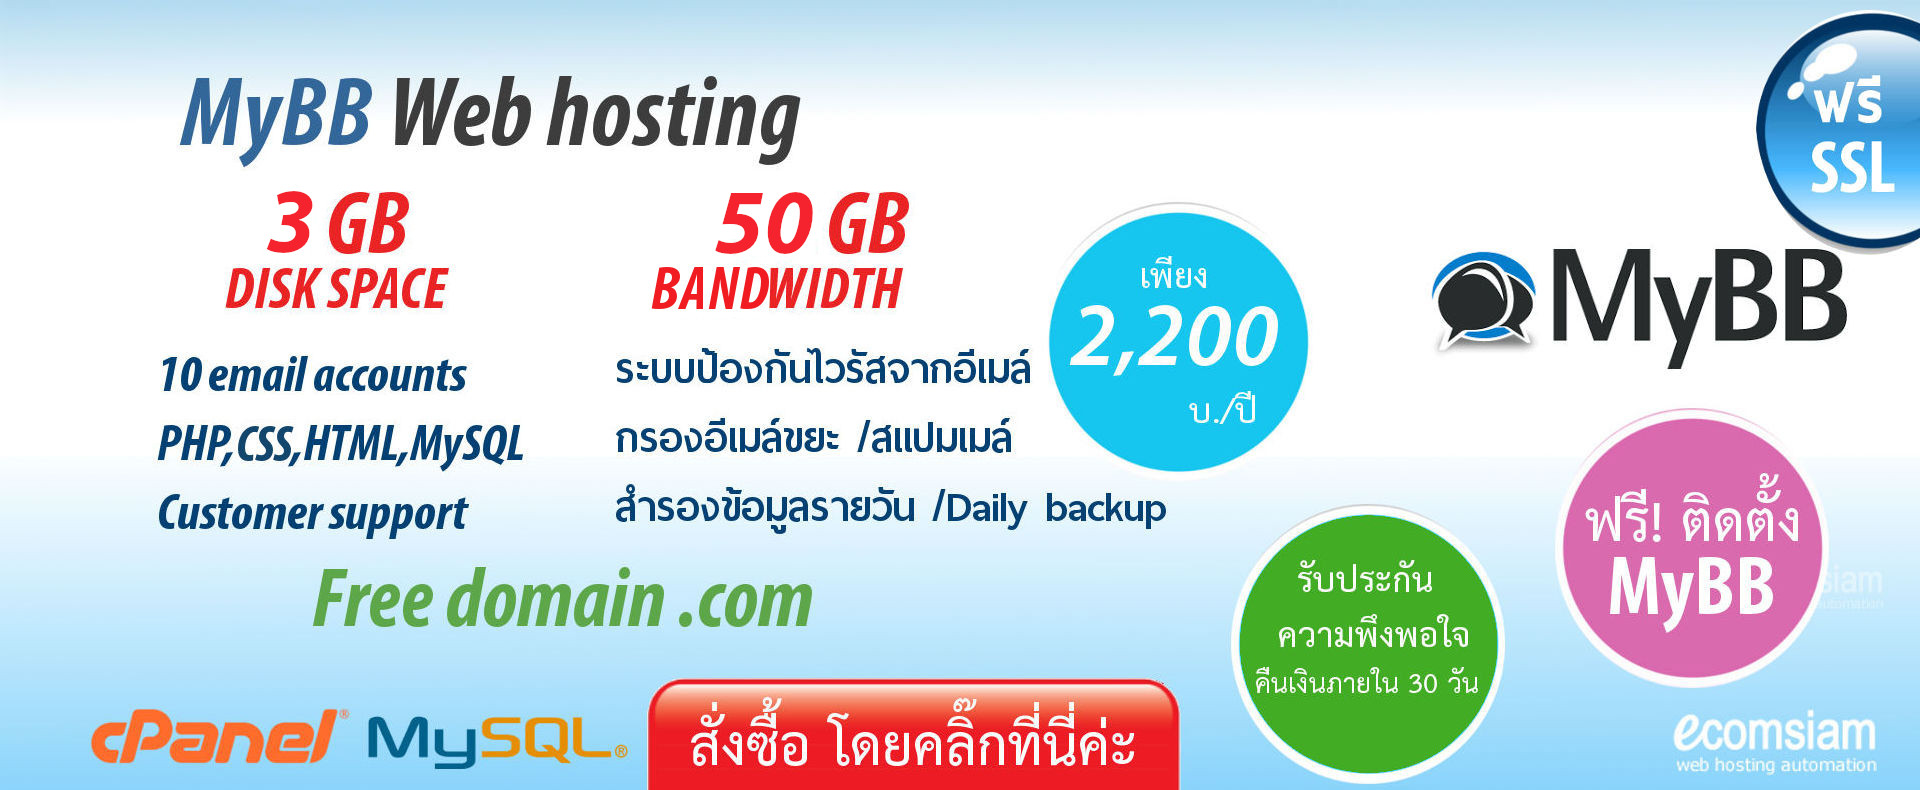 myBB web hosting เว็บโฮสติ้งไทย ราคาเบาๆ เริ่มต้นเพียง 2200 บาทต่อปี ฟรีโดเมน ฟรี SSL สำหรับ web hosting thailand